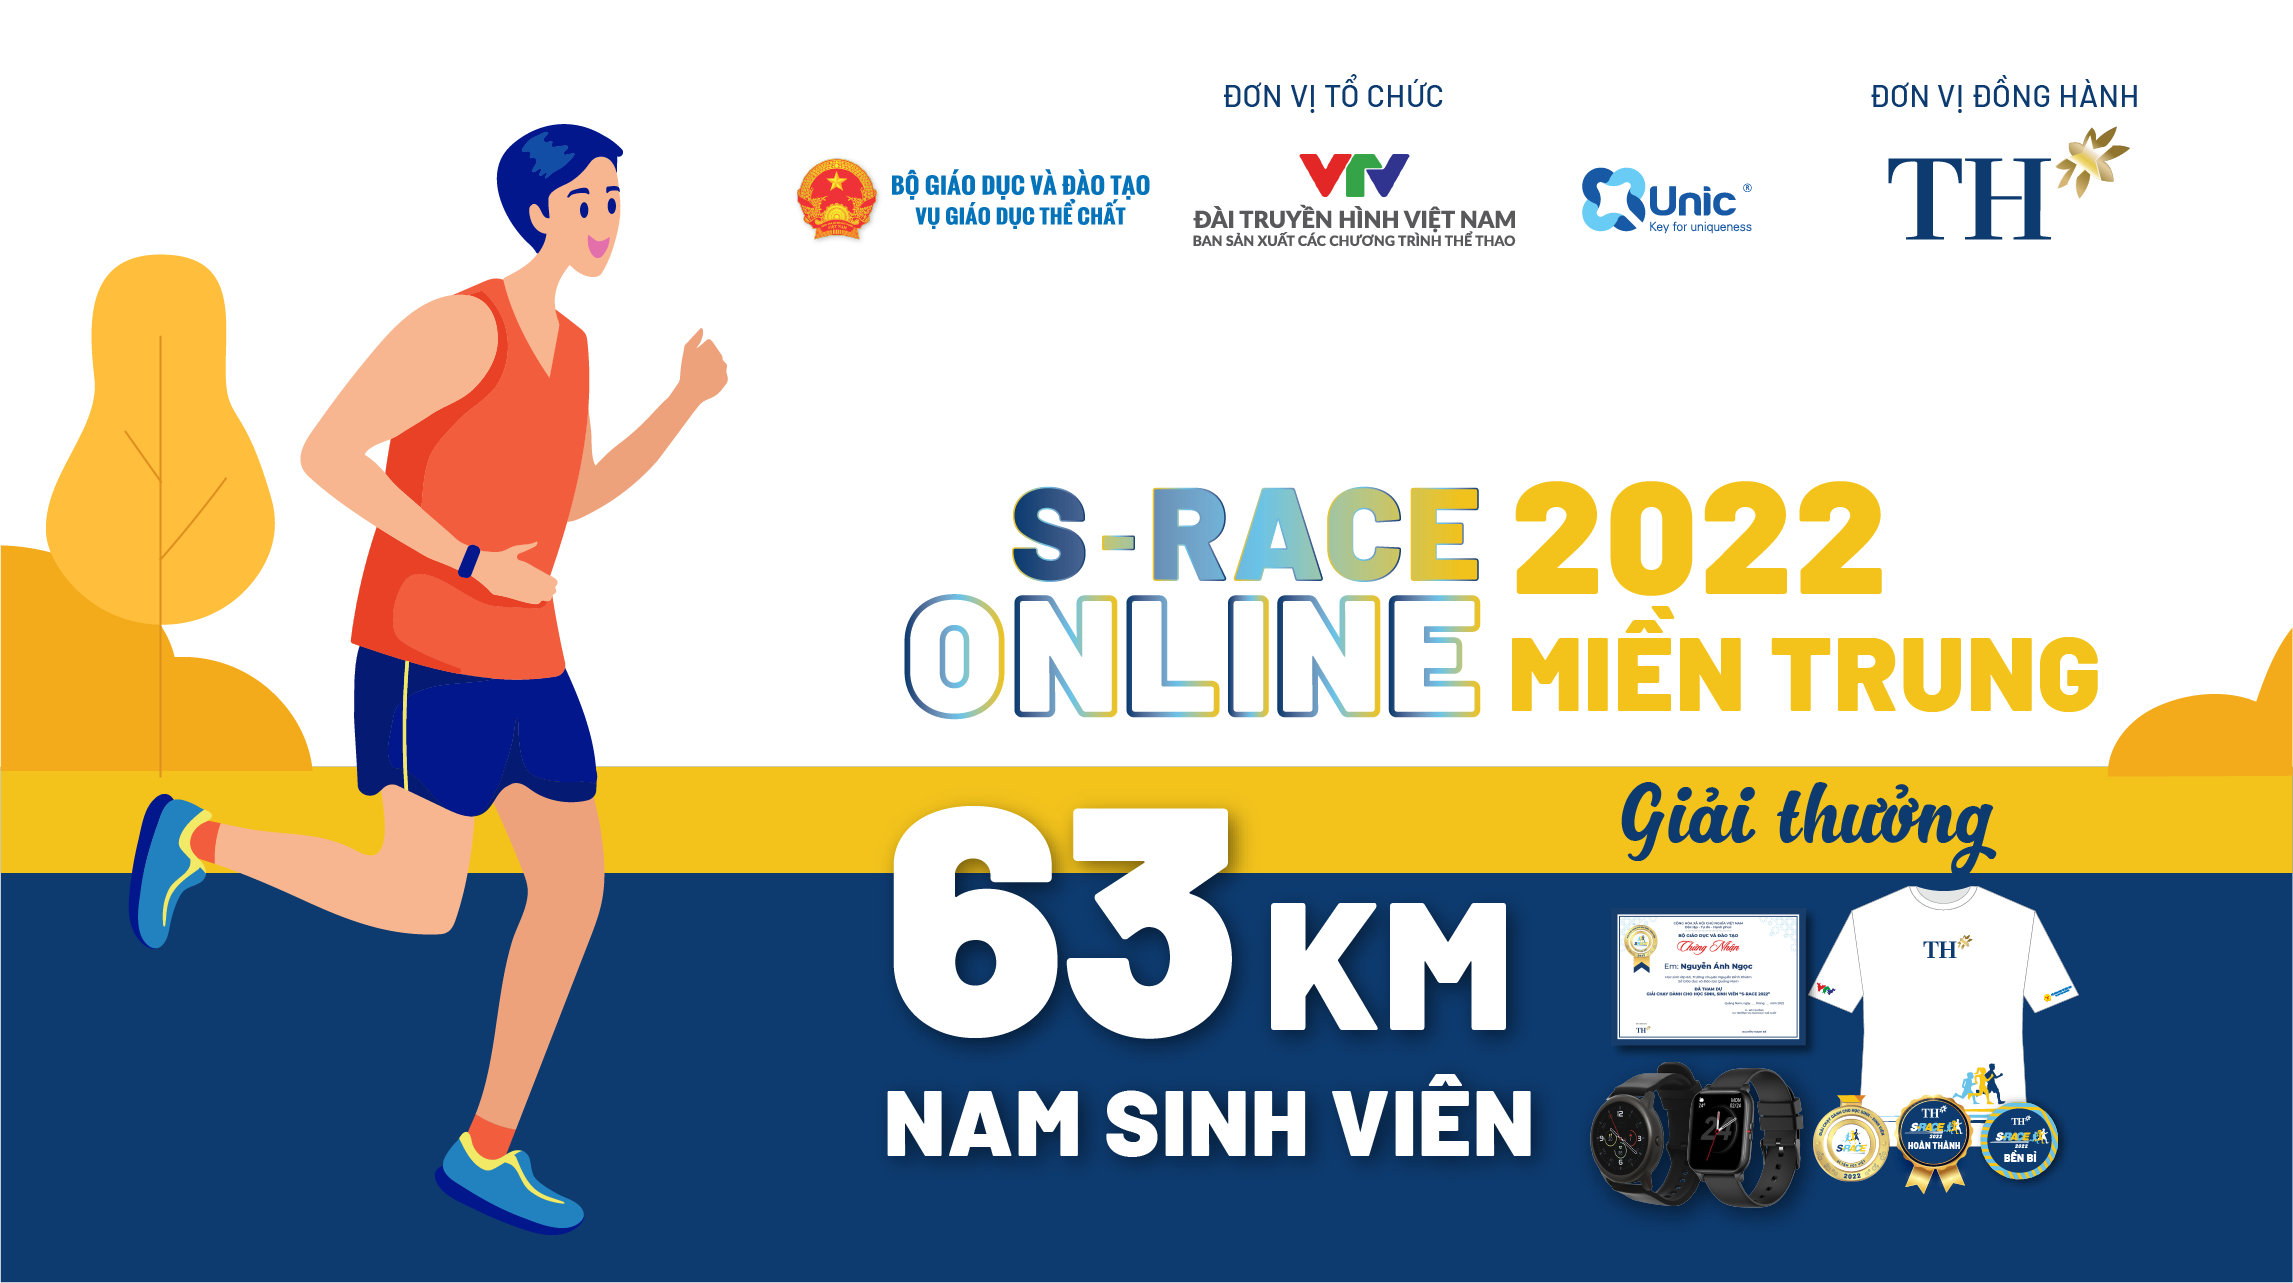 63 KM NAM SINH VIÊN (S-Race Online miền Trung) - Unlimited Chain